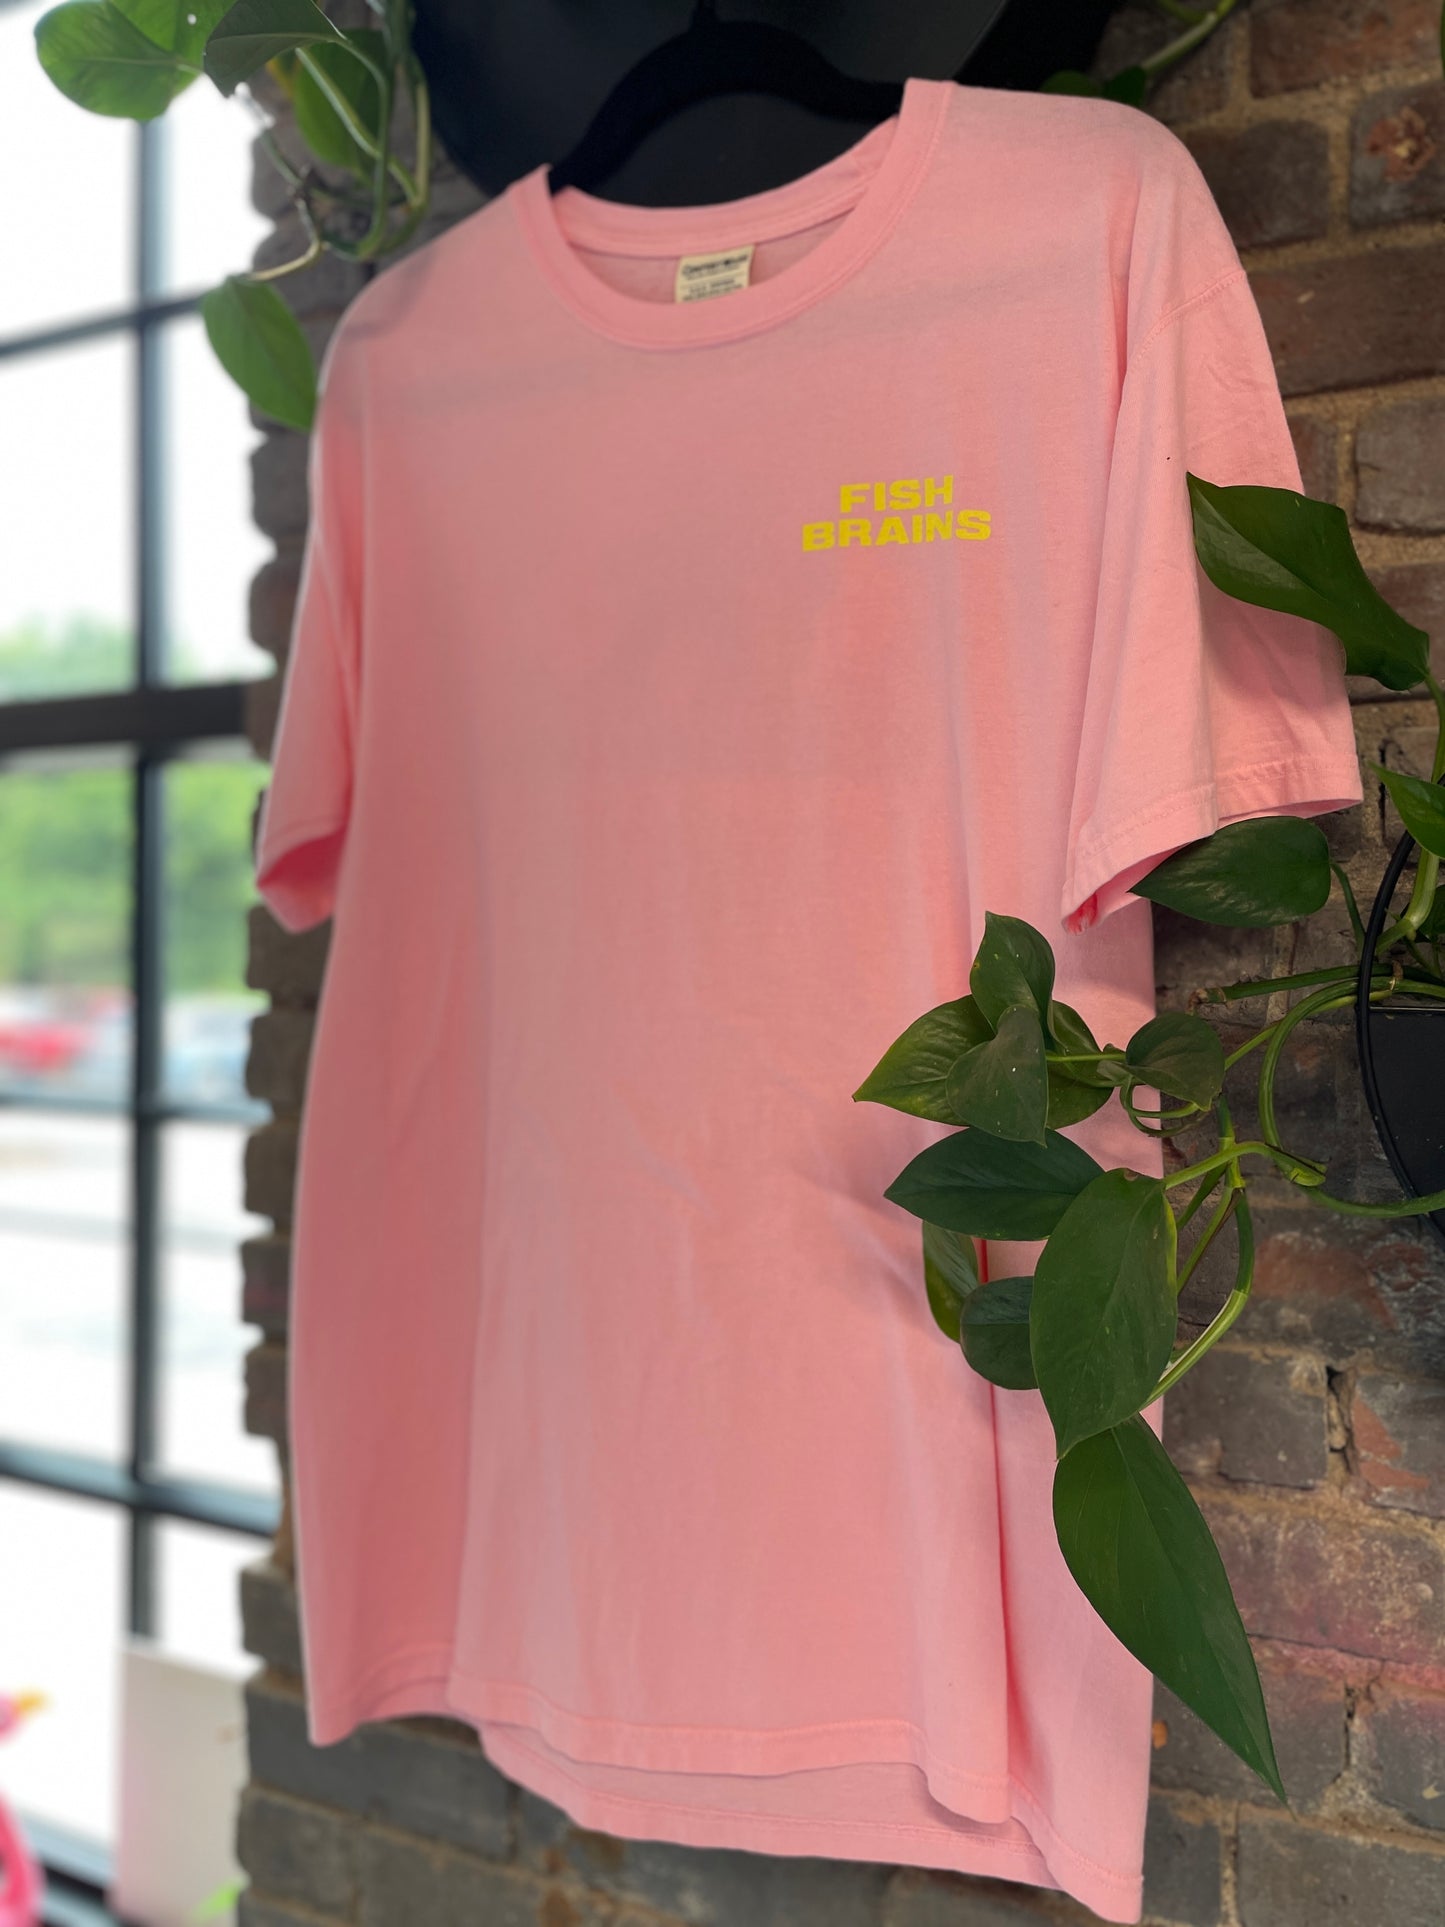 FishBrains Short Sleeve T-Shirt - Pink